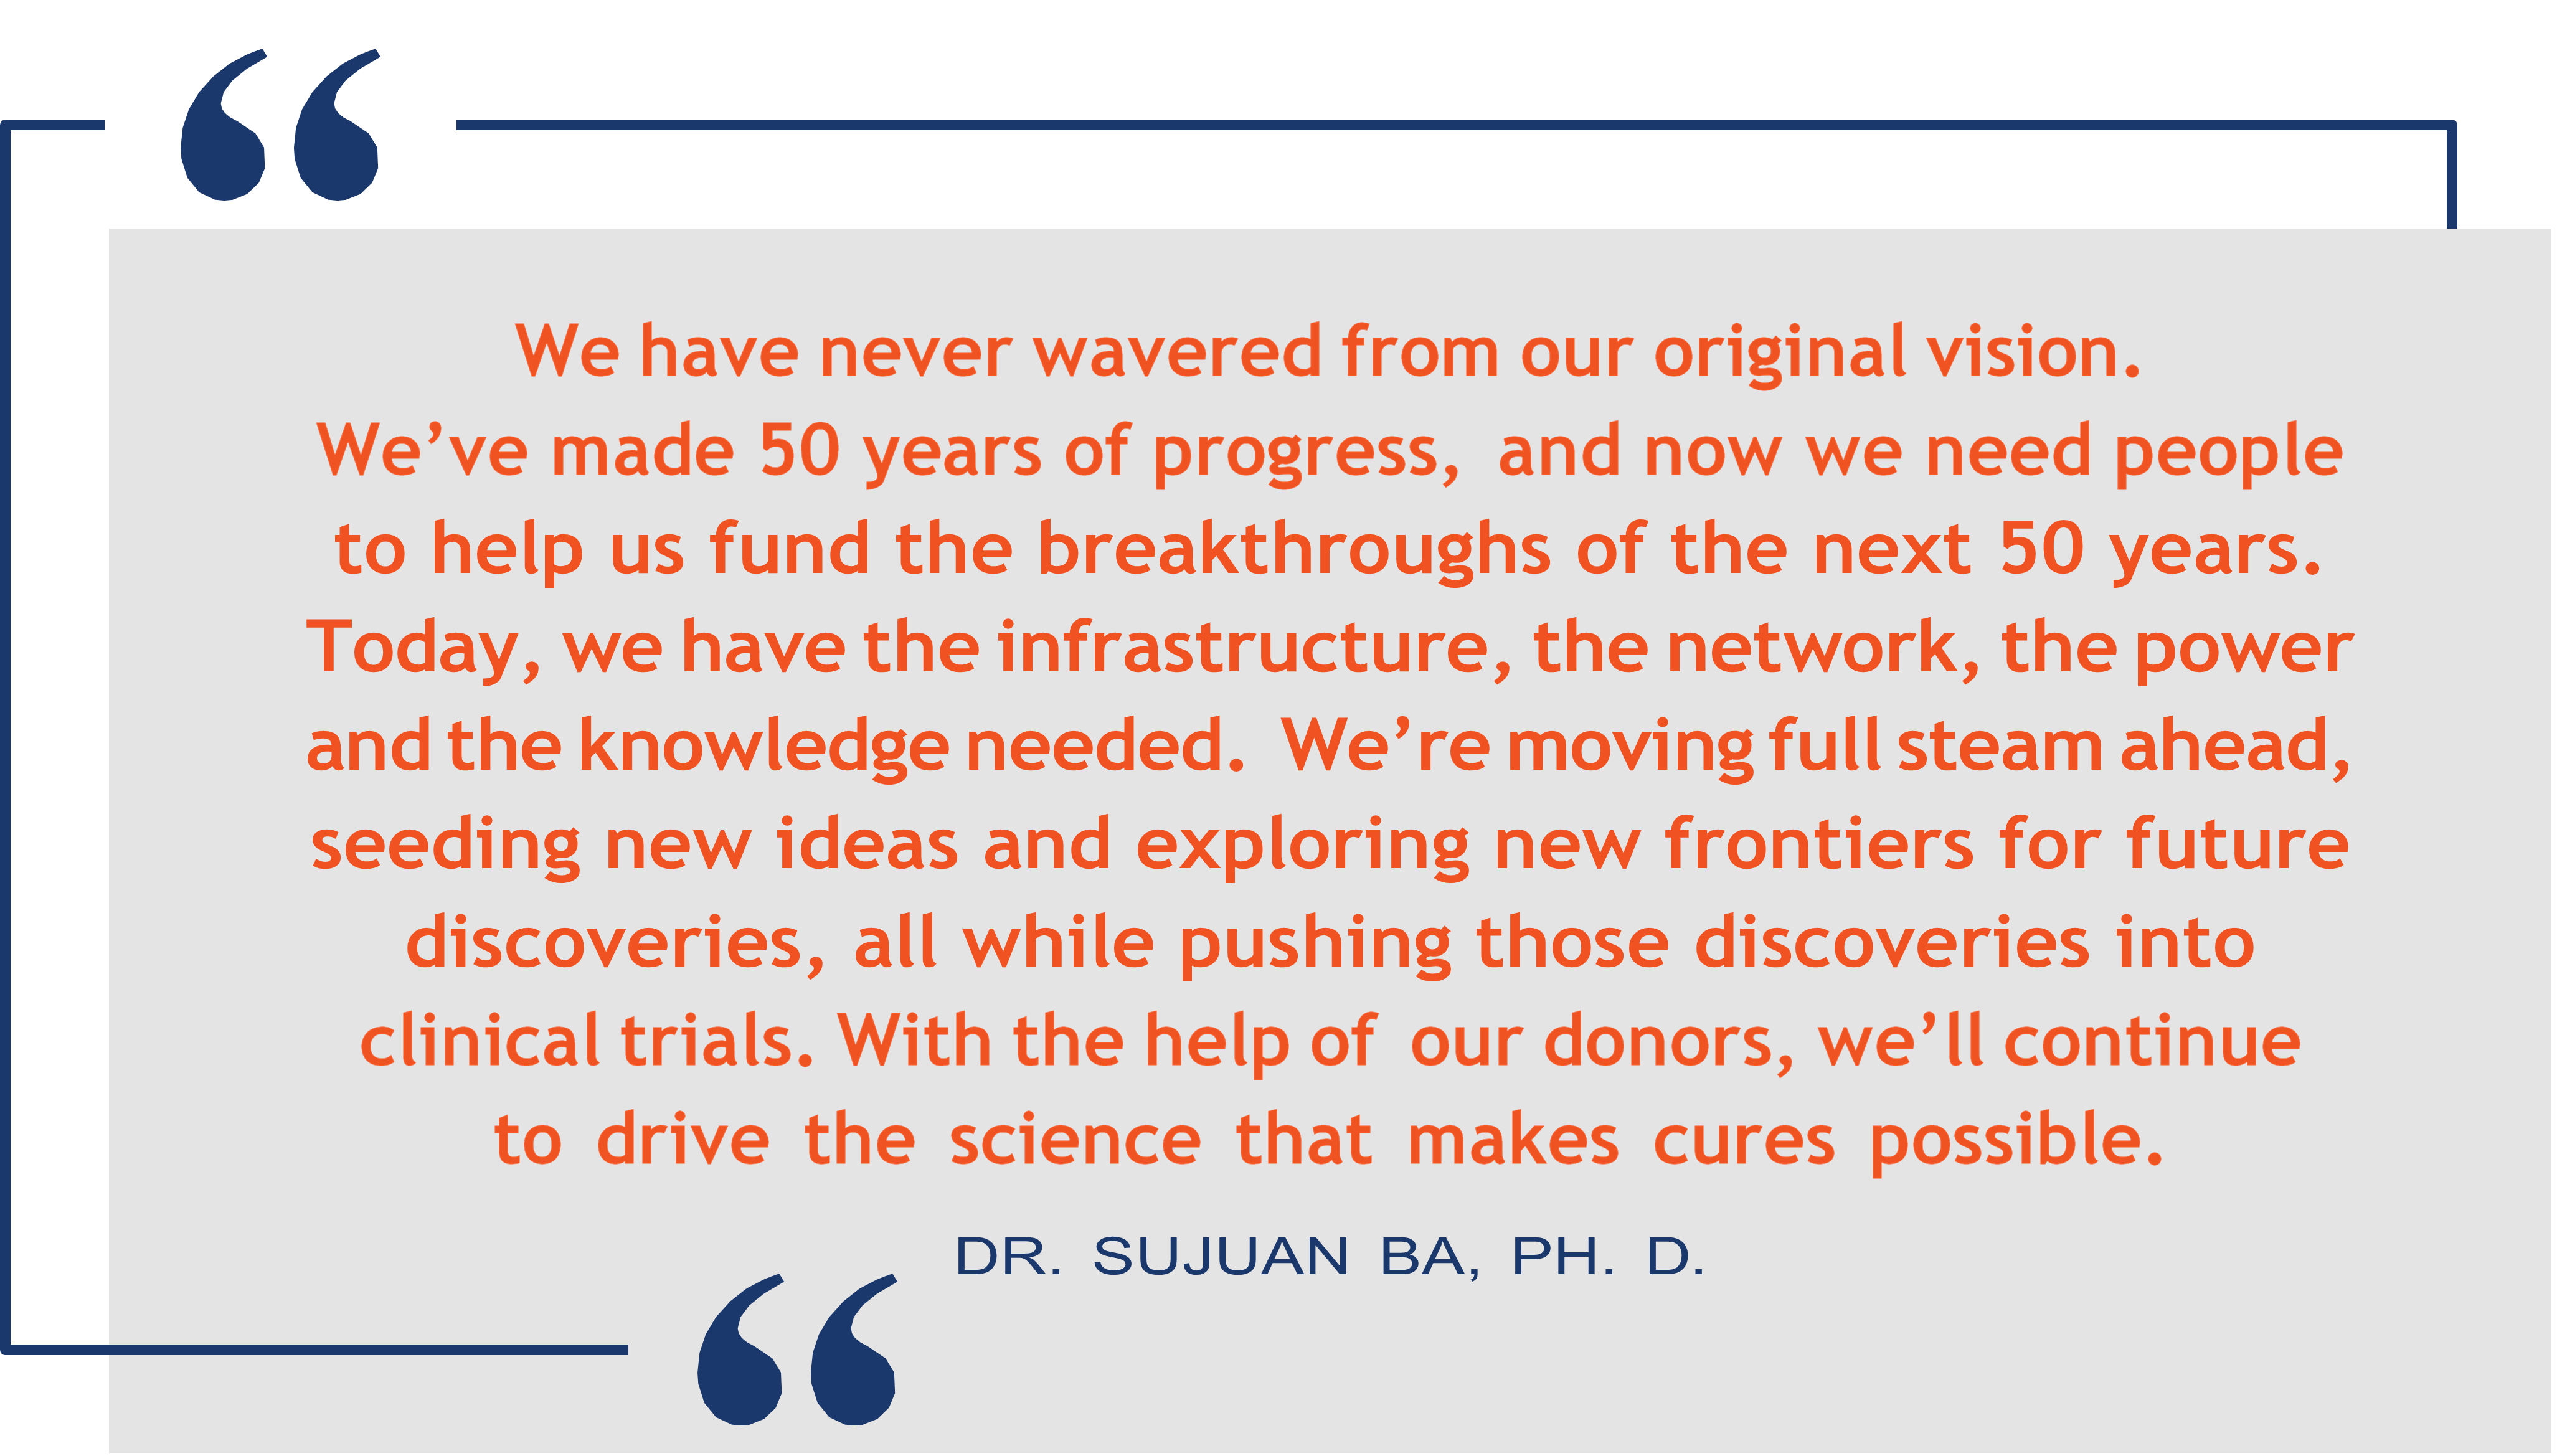 Dr. Sujuan Ba quote